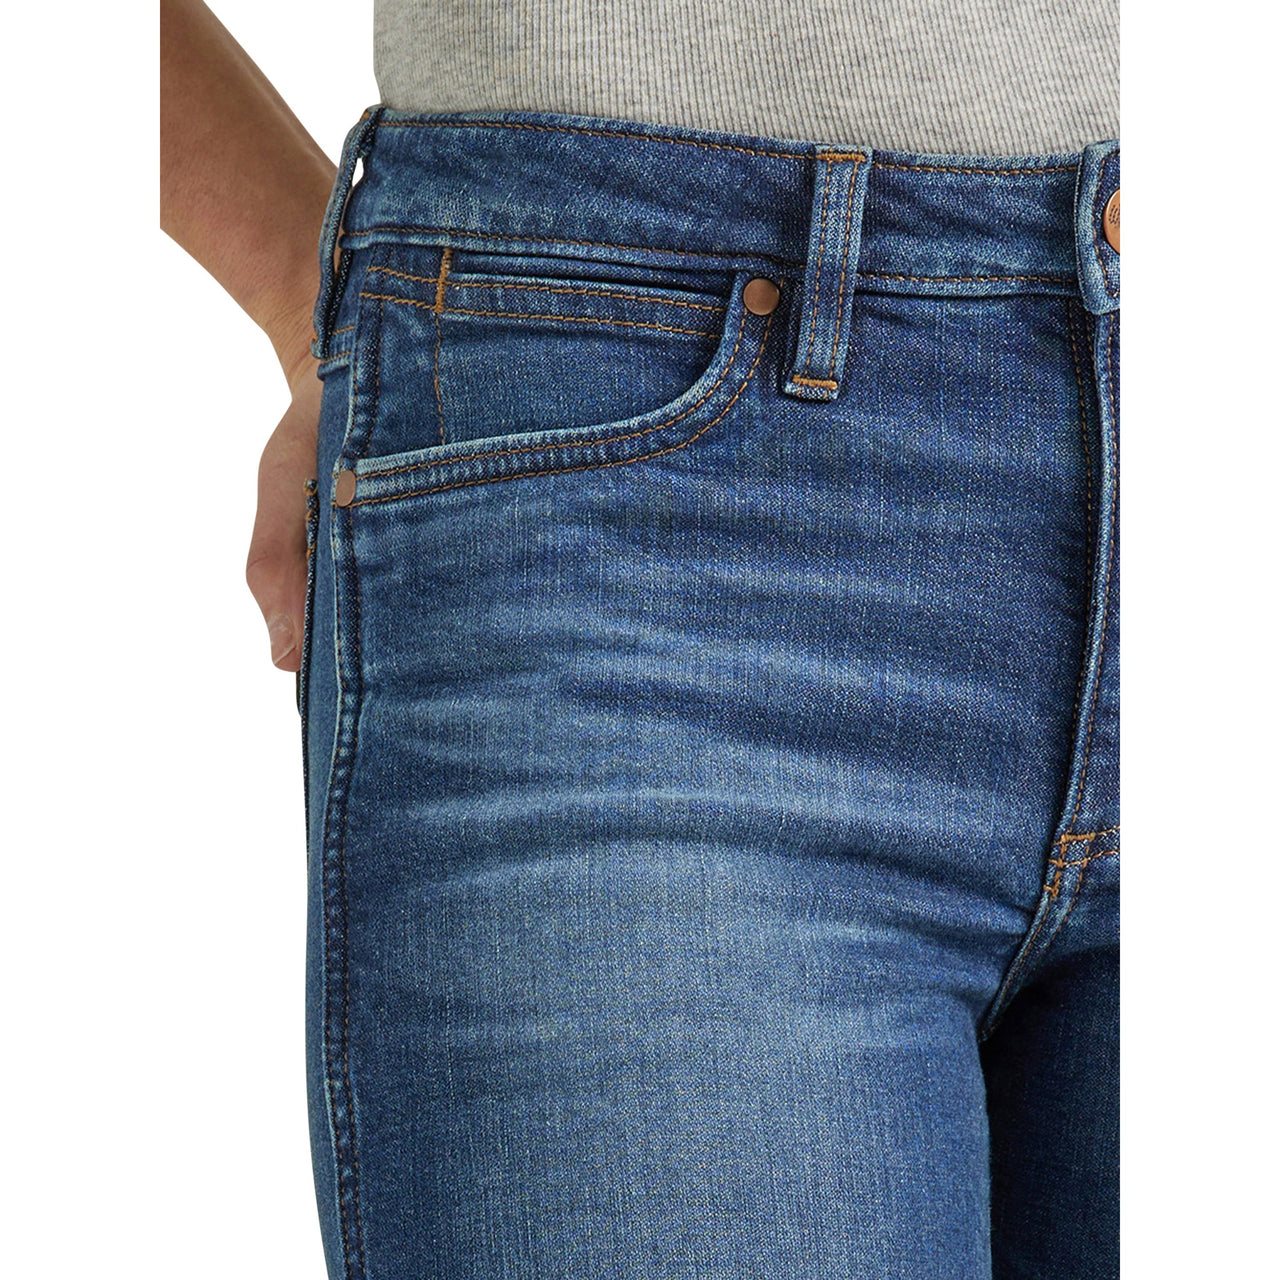 Wrangler Women's Retro Fashion High Rise Trouser Jeans - Gabriella